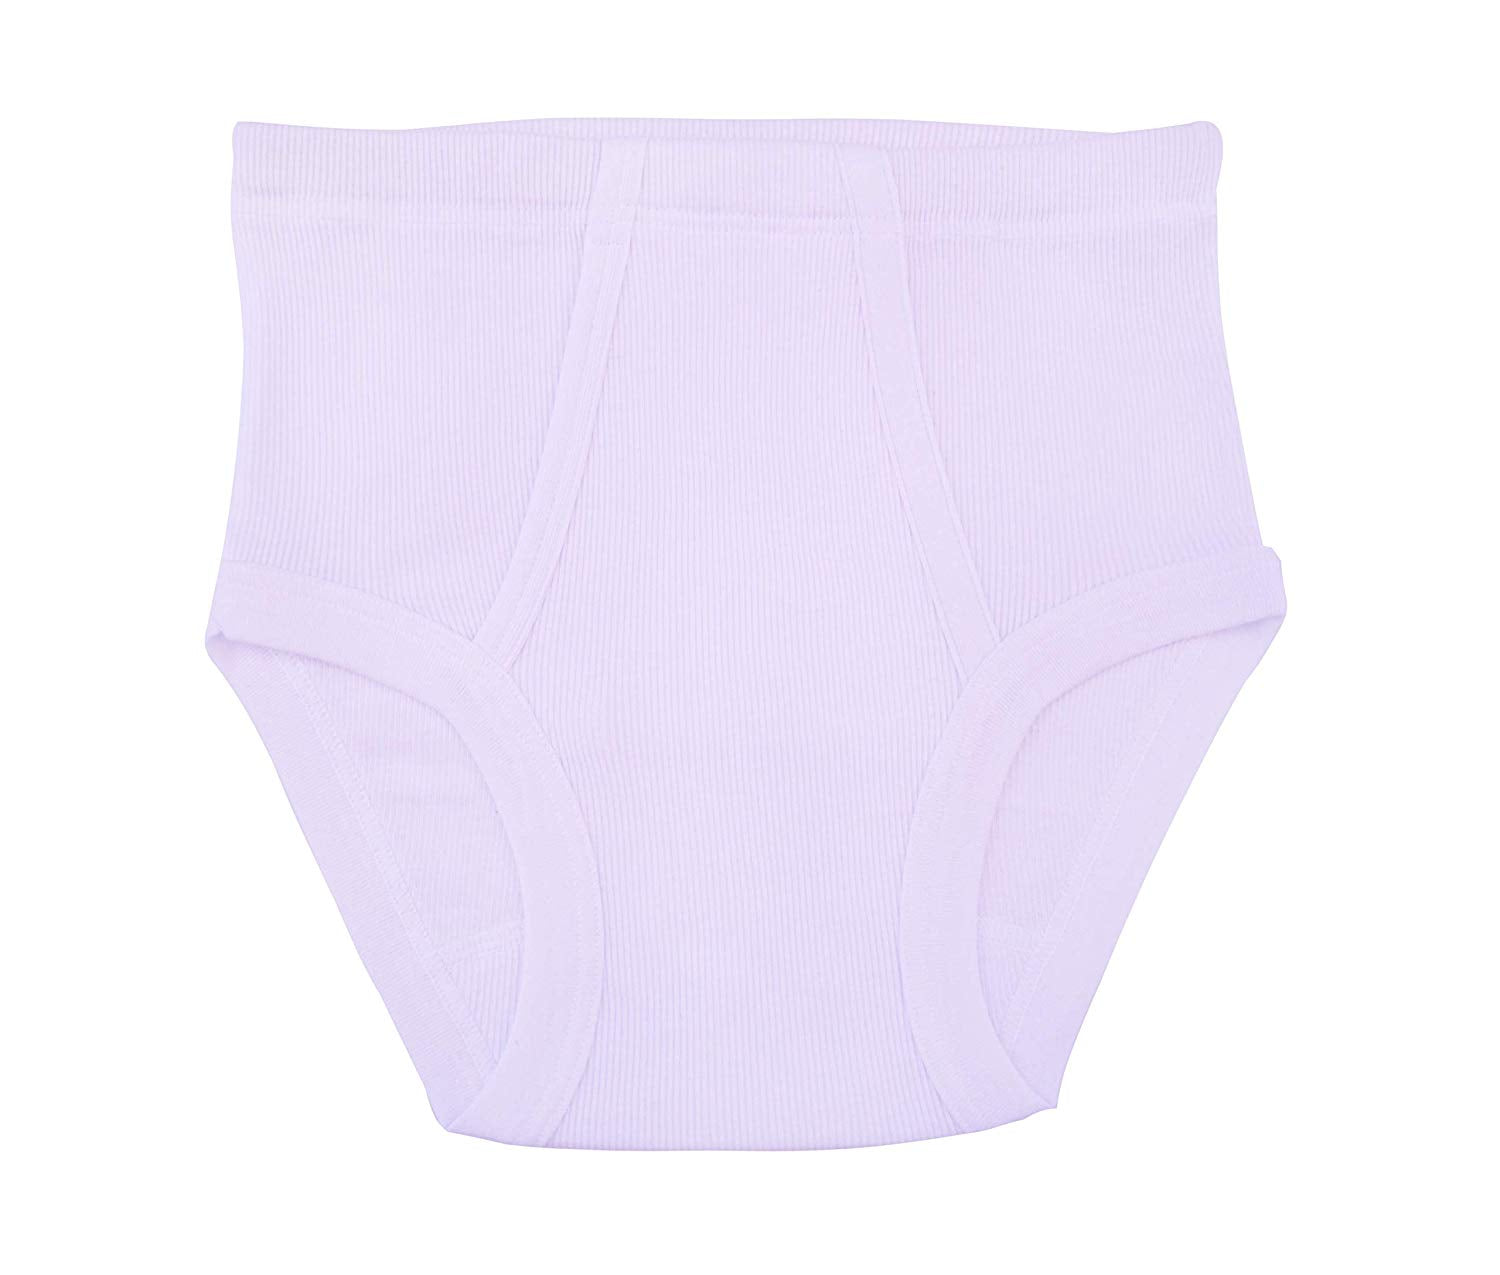 MaRe Luxury Italian Underwear 100% Mako Cotton Men's Briefs with Fly.